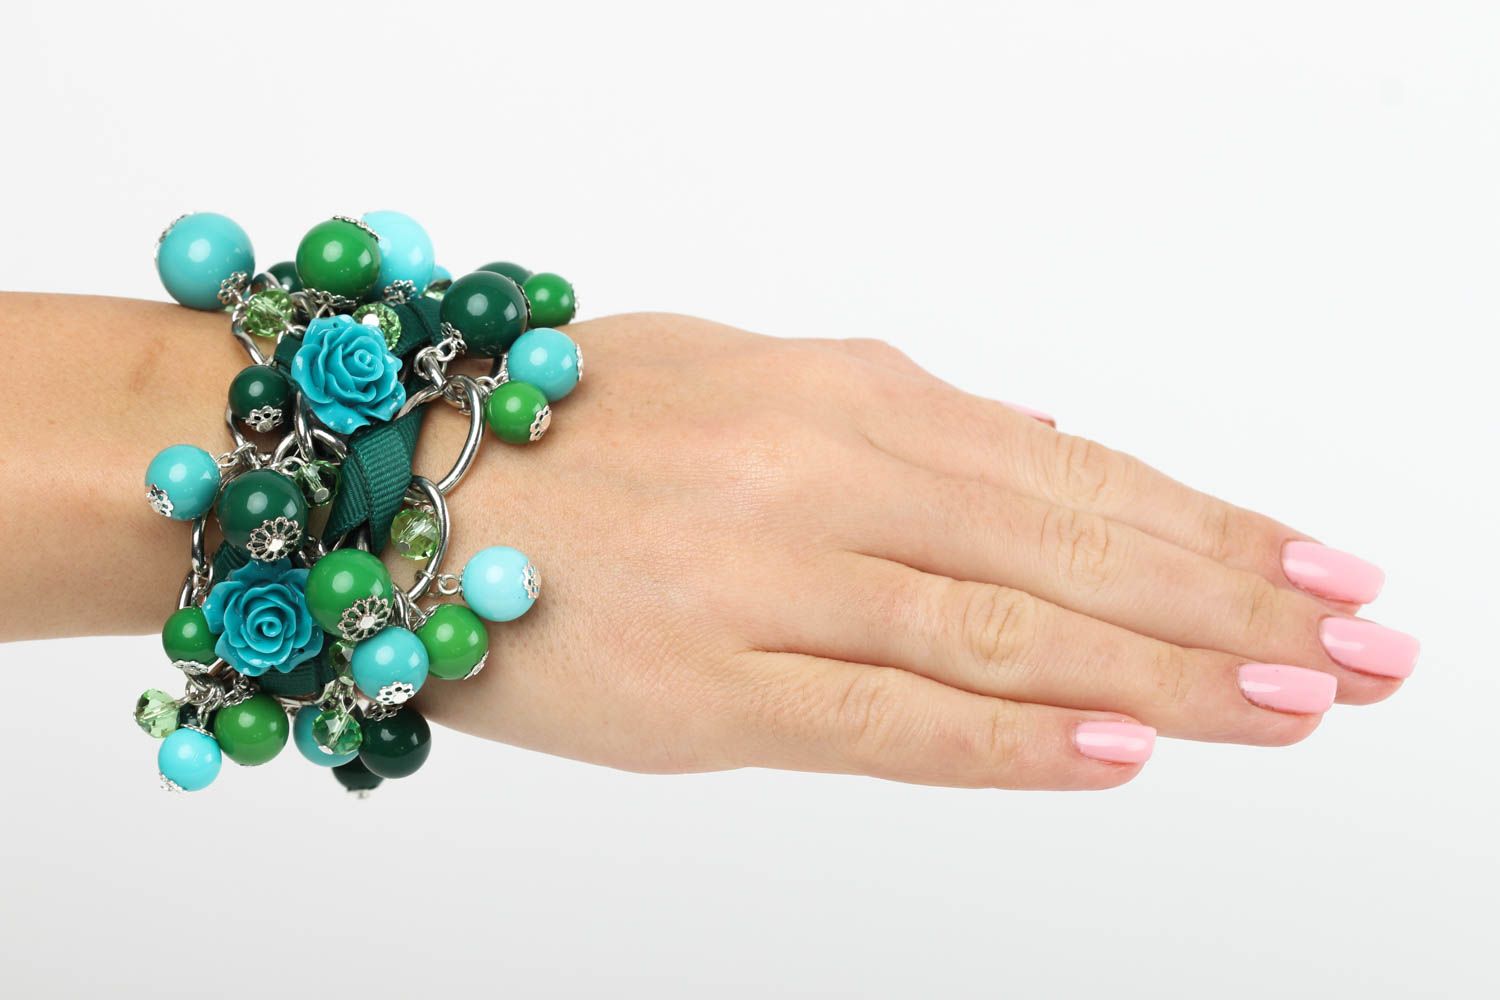 Beaded bracelet handmade stylish jewelry bright accessories fashion jewelry photo 1